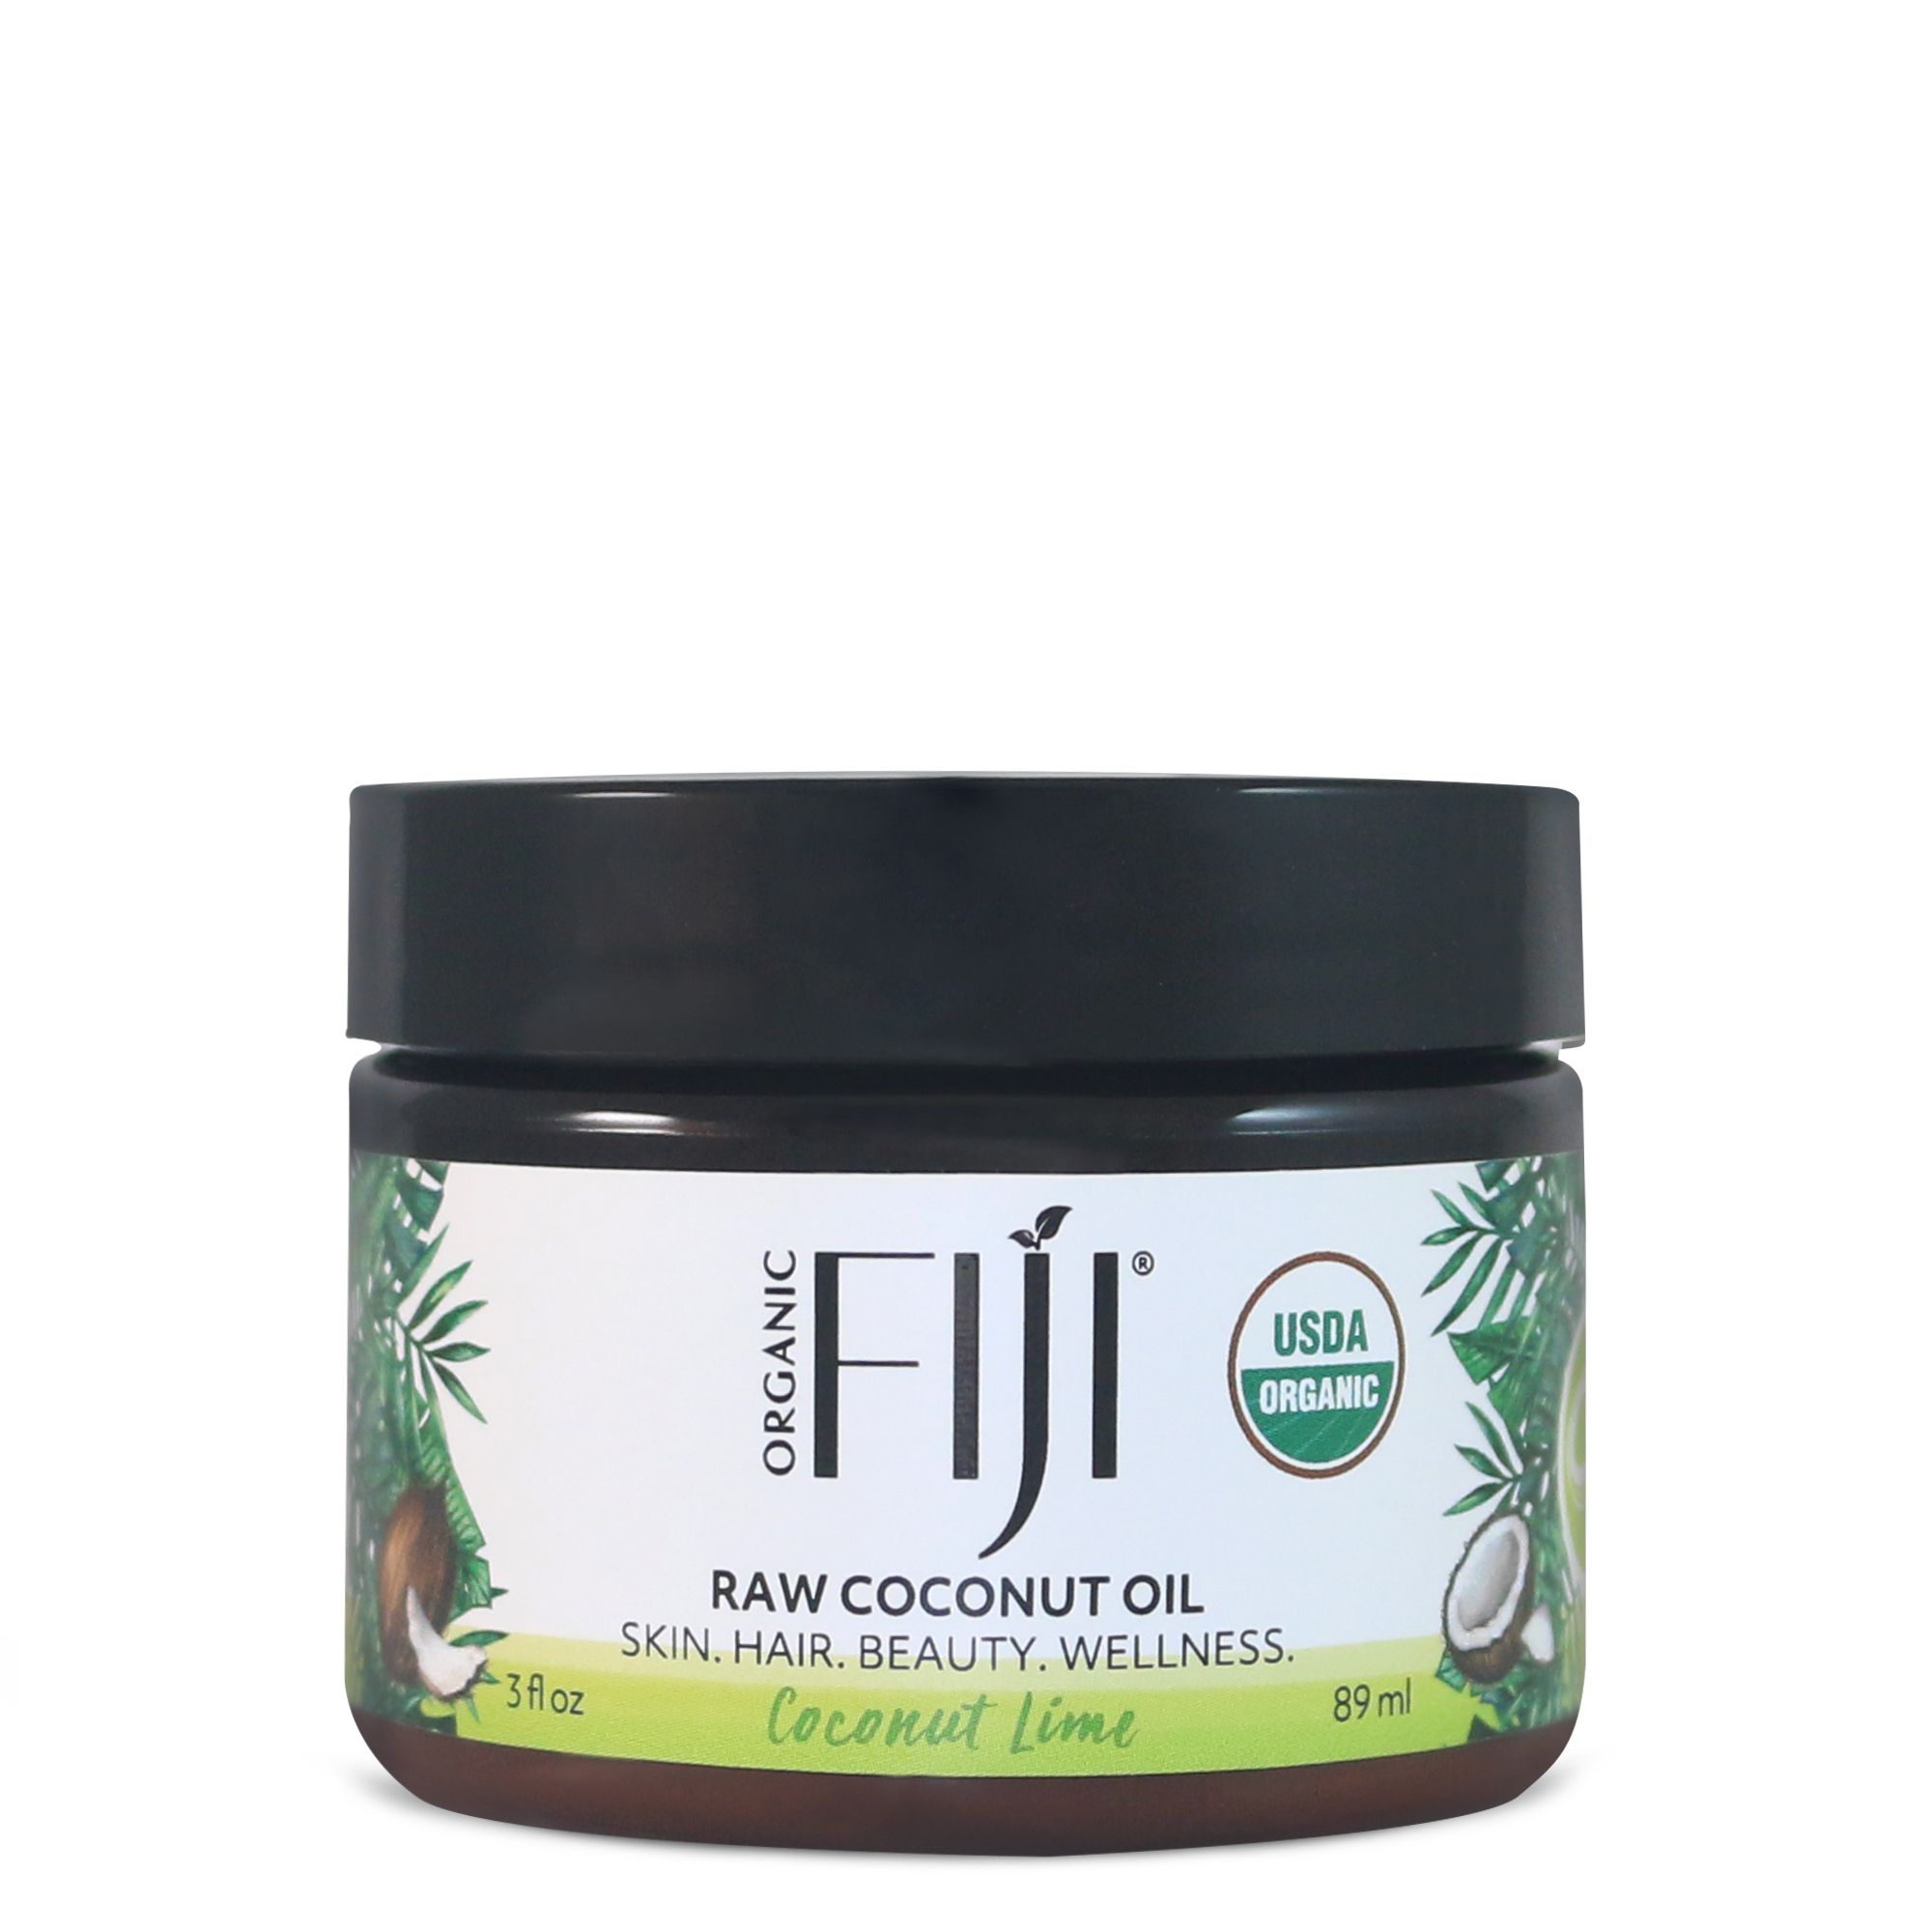 Picture of Organic Fiji 833884001302 3 oz Coconut Lime Coconut Oil